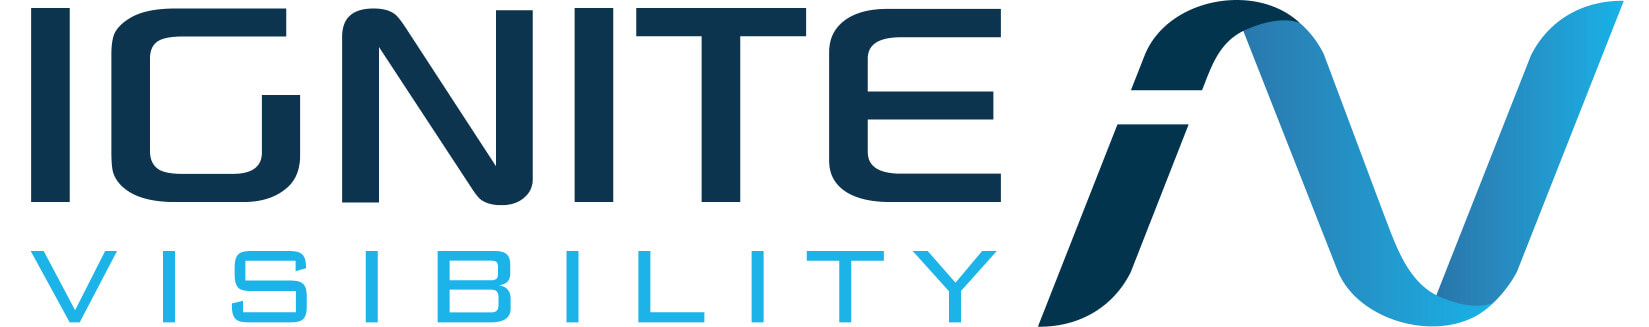  Top SEO Company Logo: Ignite Visibility